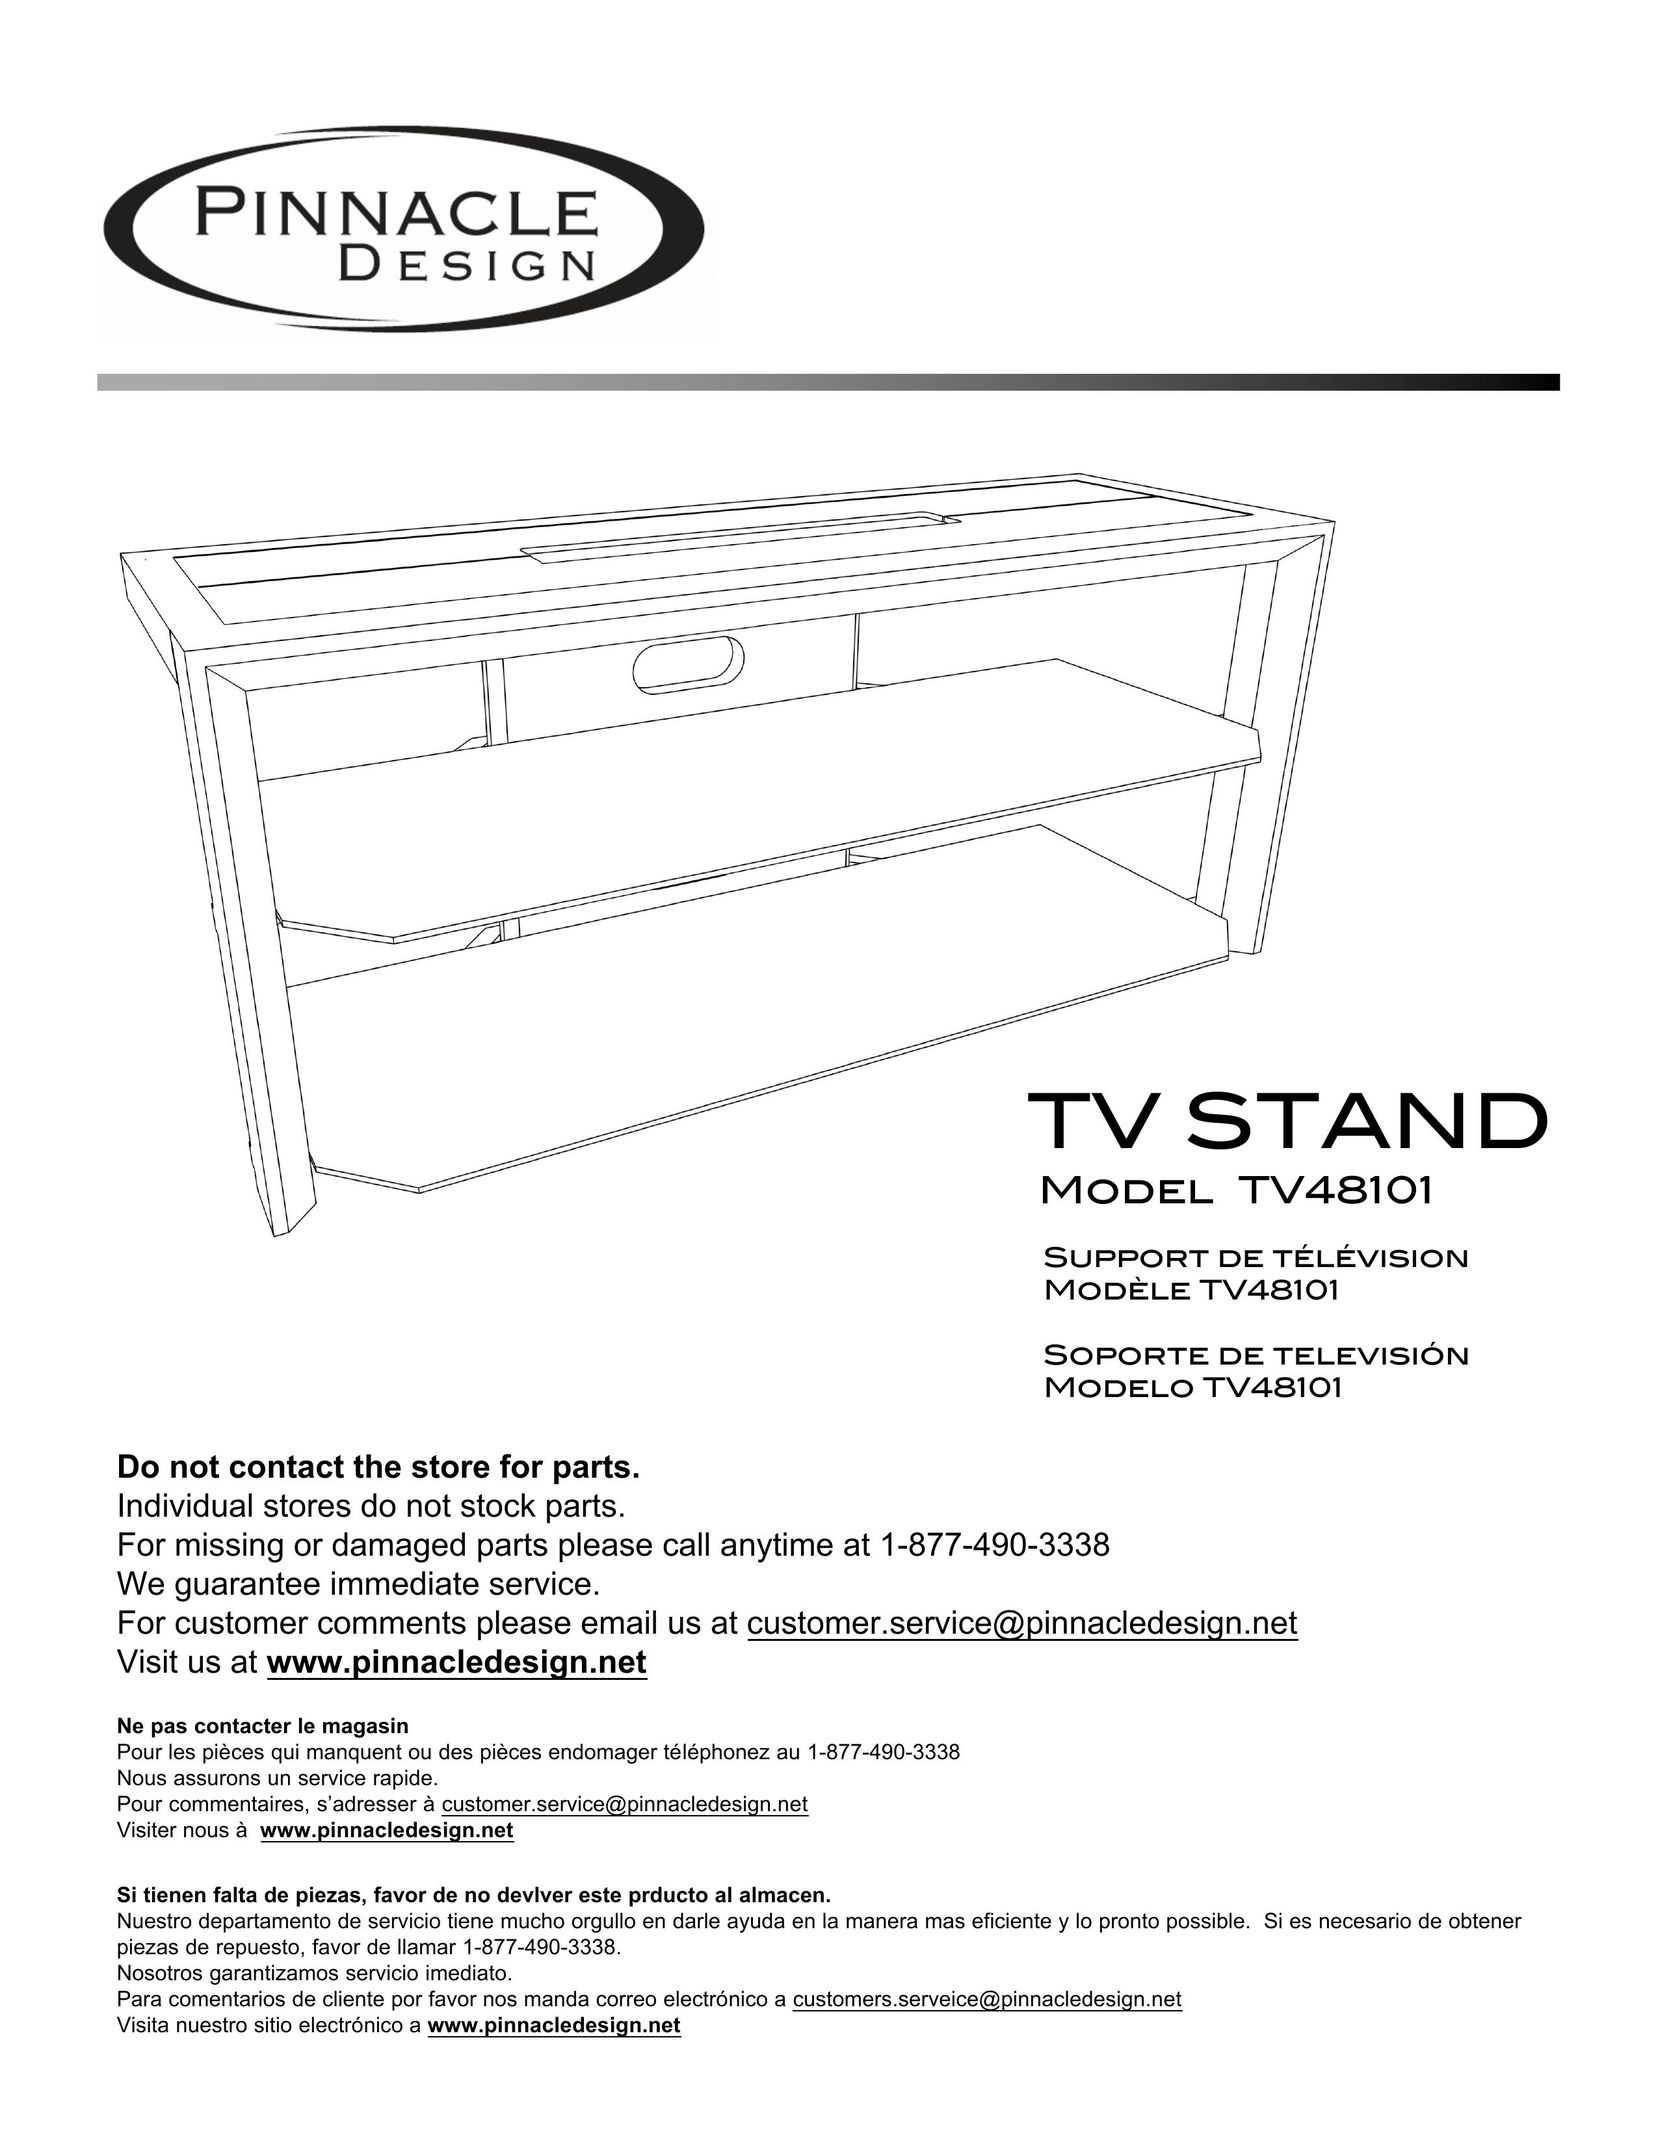 Pinnacle Design TV48101 TV Video Accessories User Manual